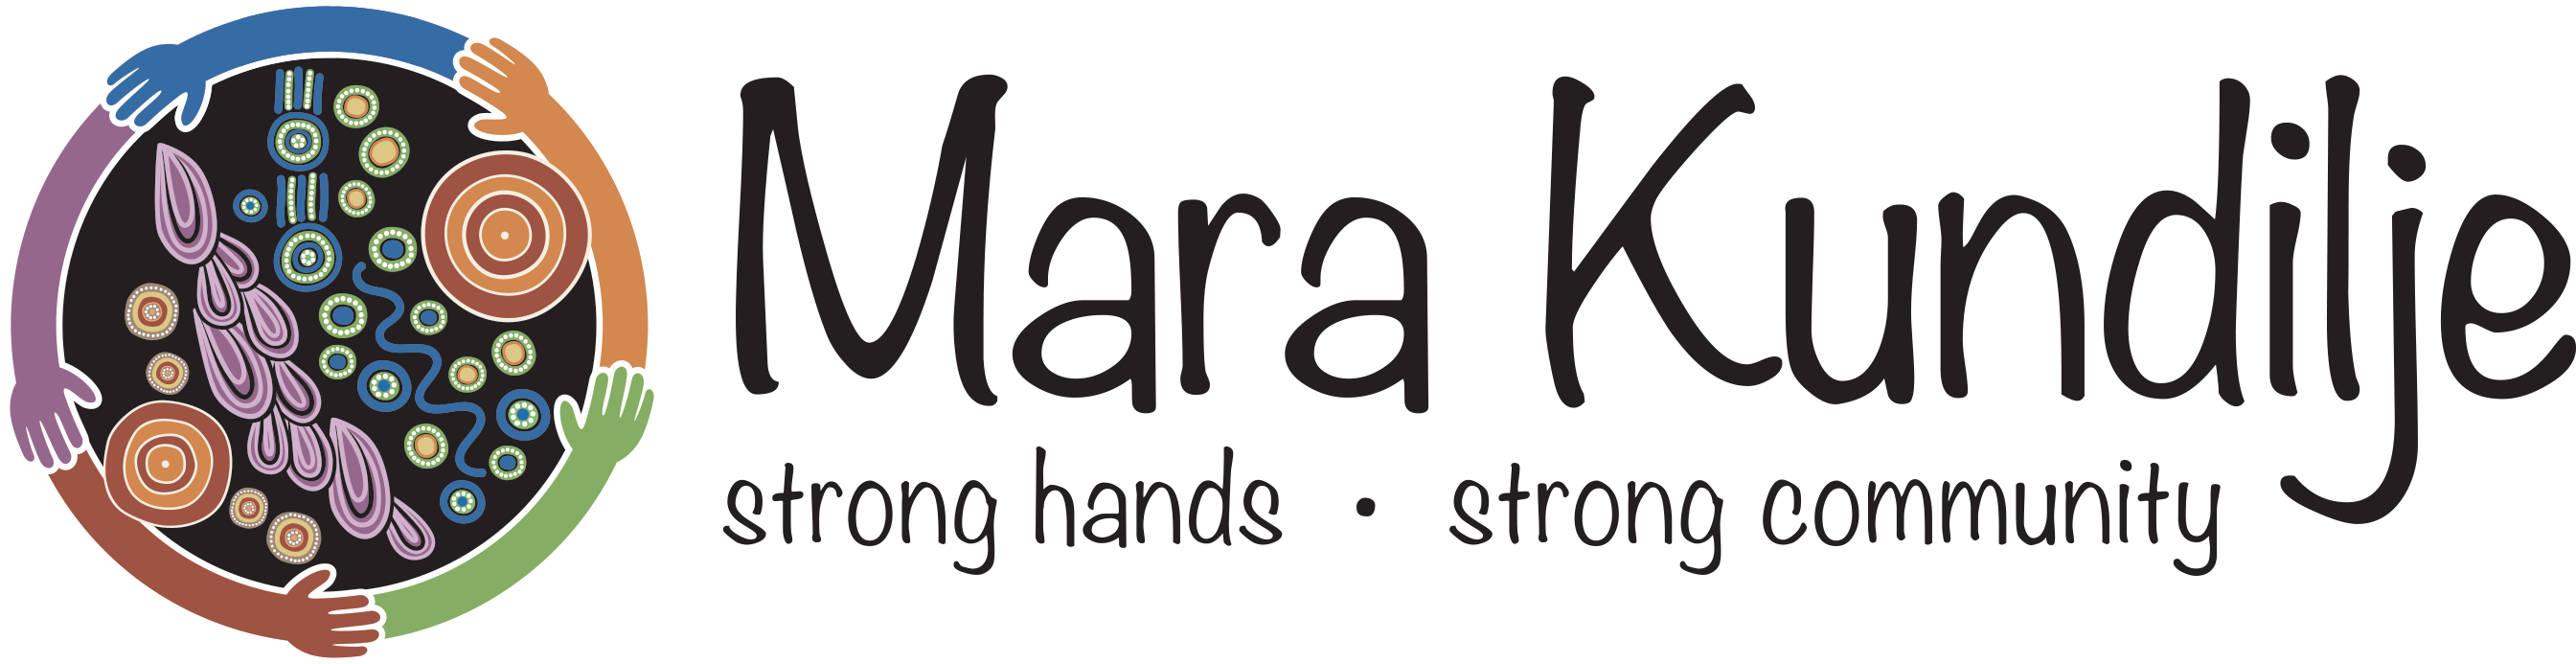 MK_logo+tagline